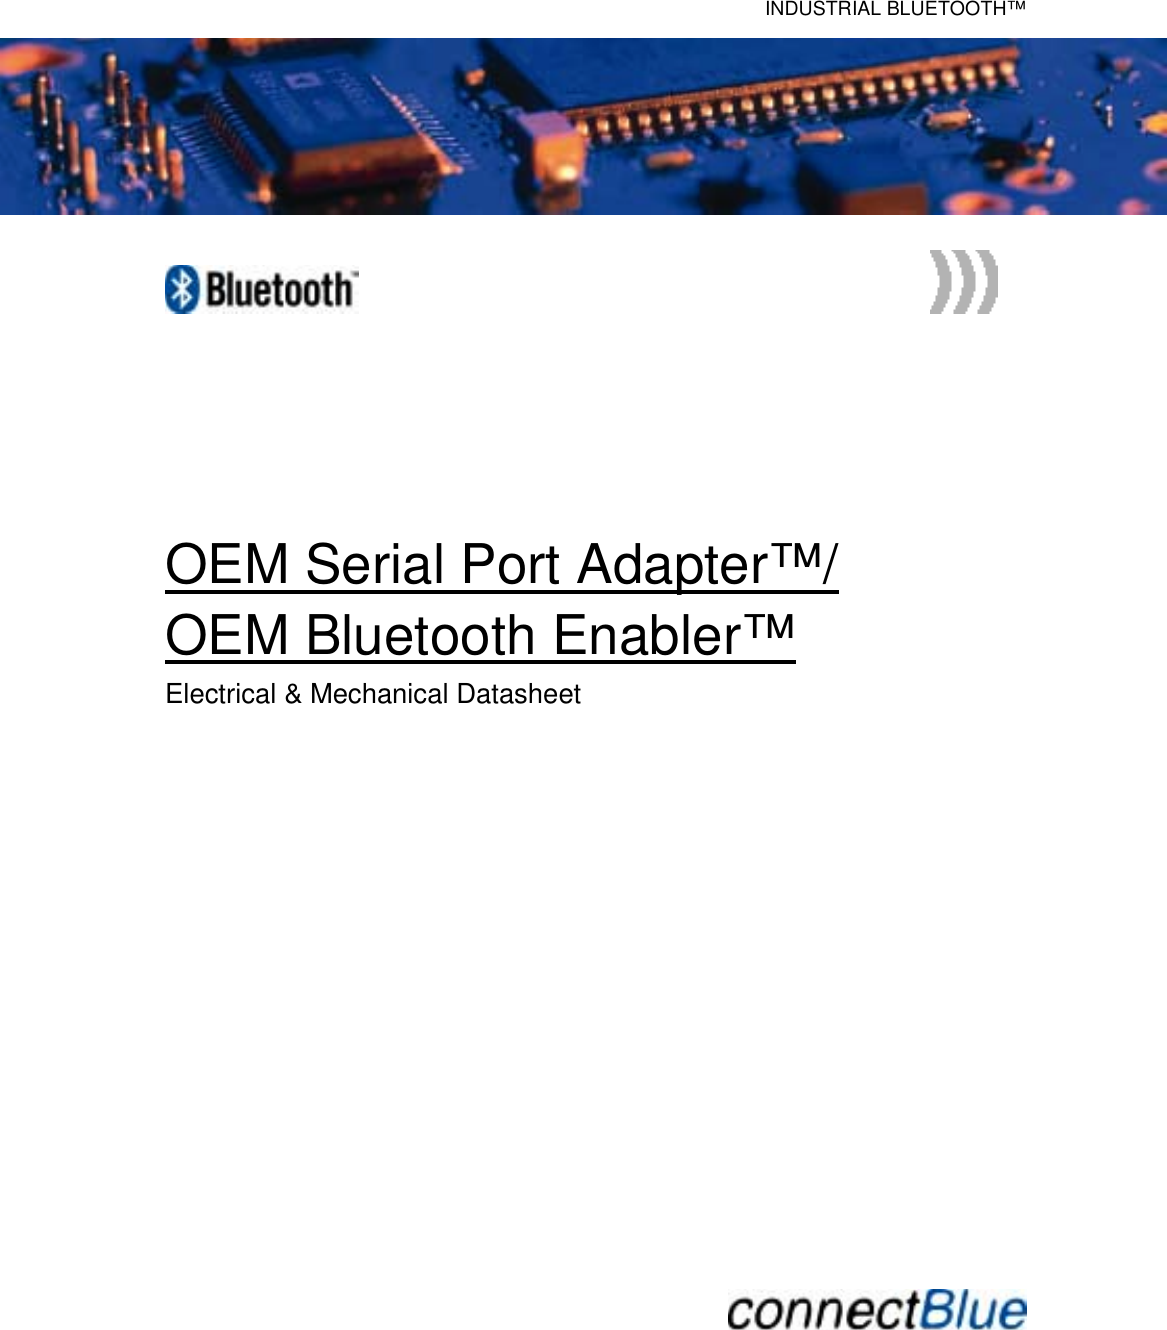   INDUSTRIAL BLUETOOTH™              OEM Serial Port Adapter™/ OEM Bluetooth Enabler™ Electrical &amp; Mechanical Datasheet                        